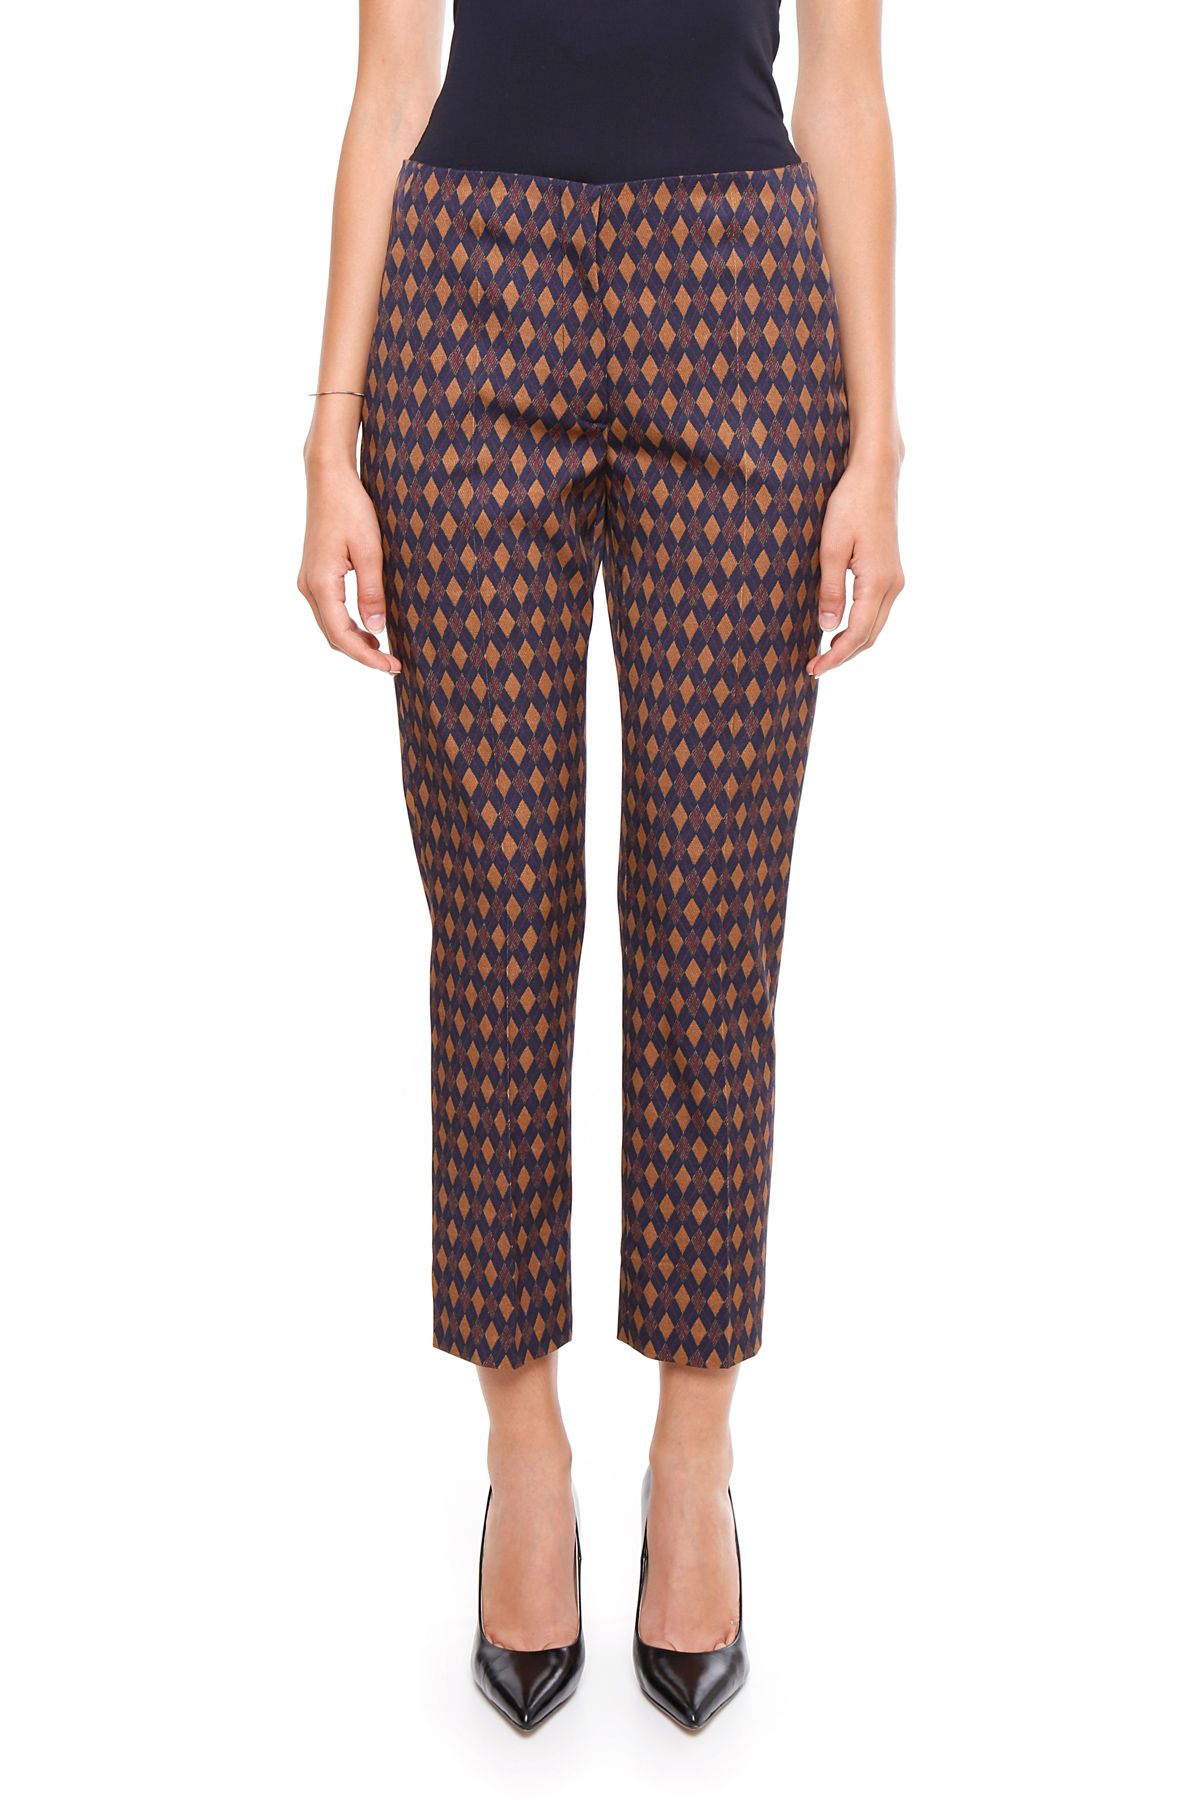 Prada - Argyle Wool Gabardine Trousers - BLU|Blu, Women's Trousers ...